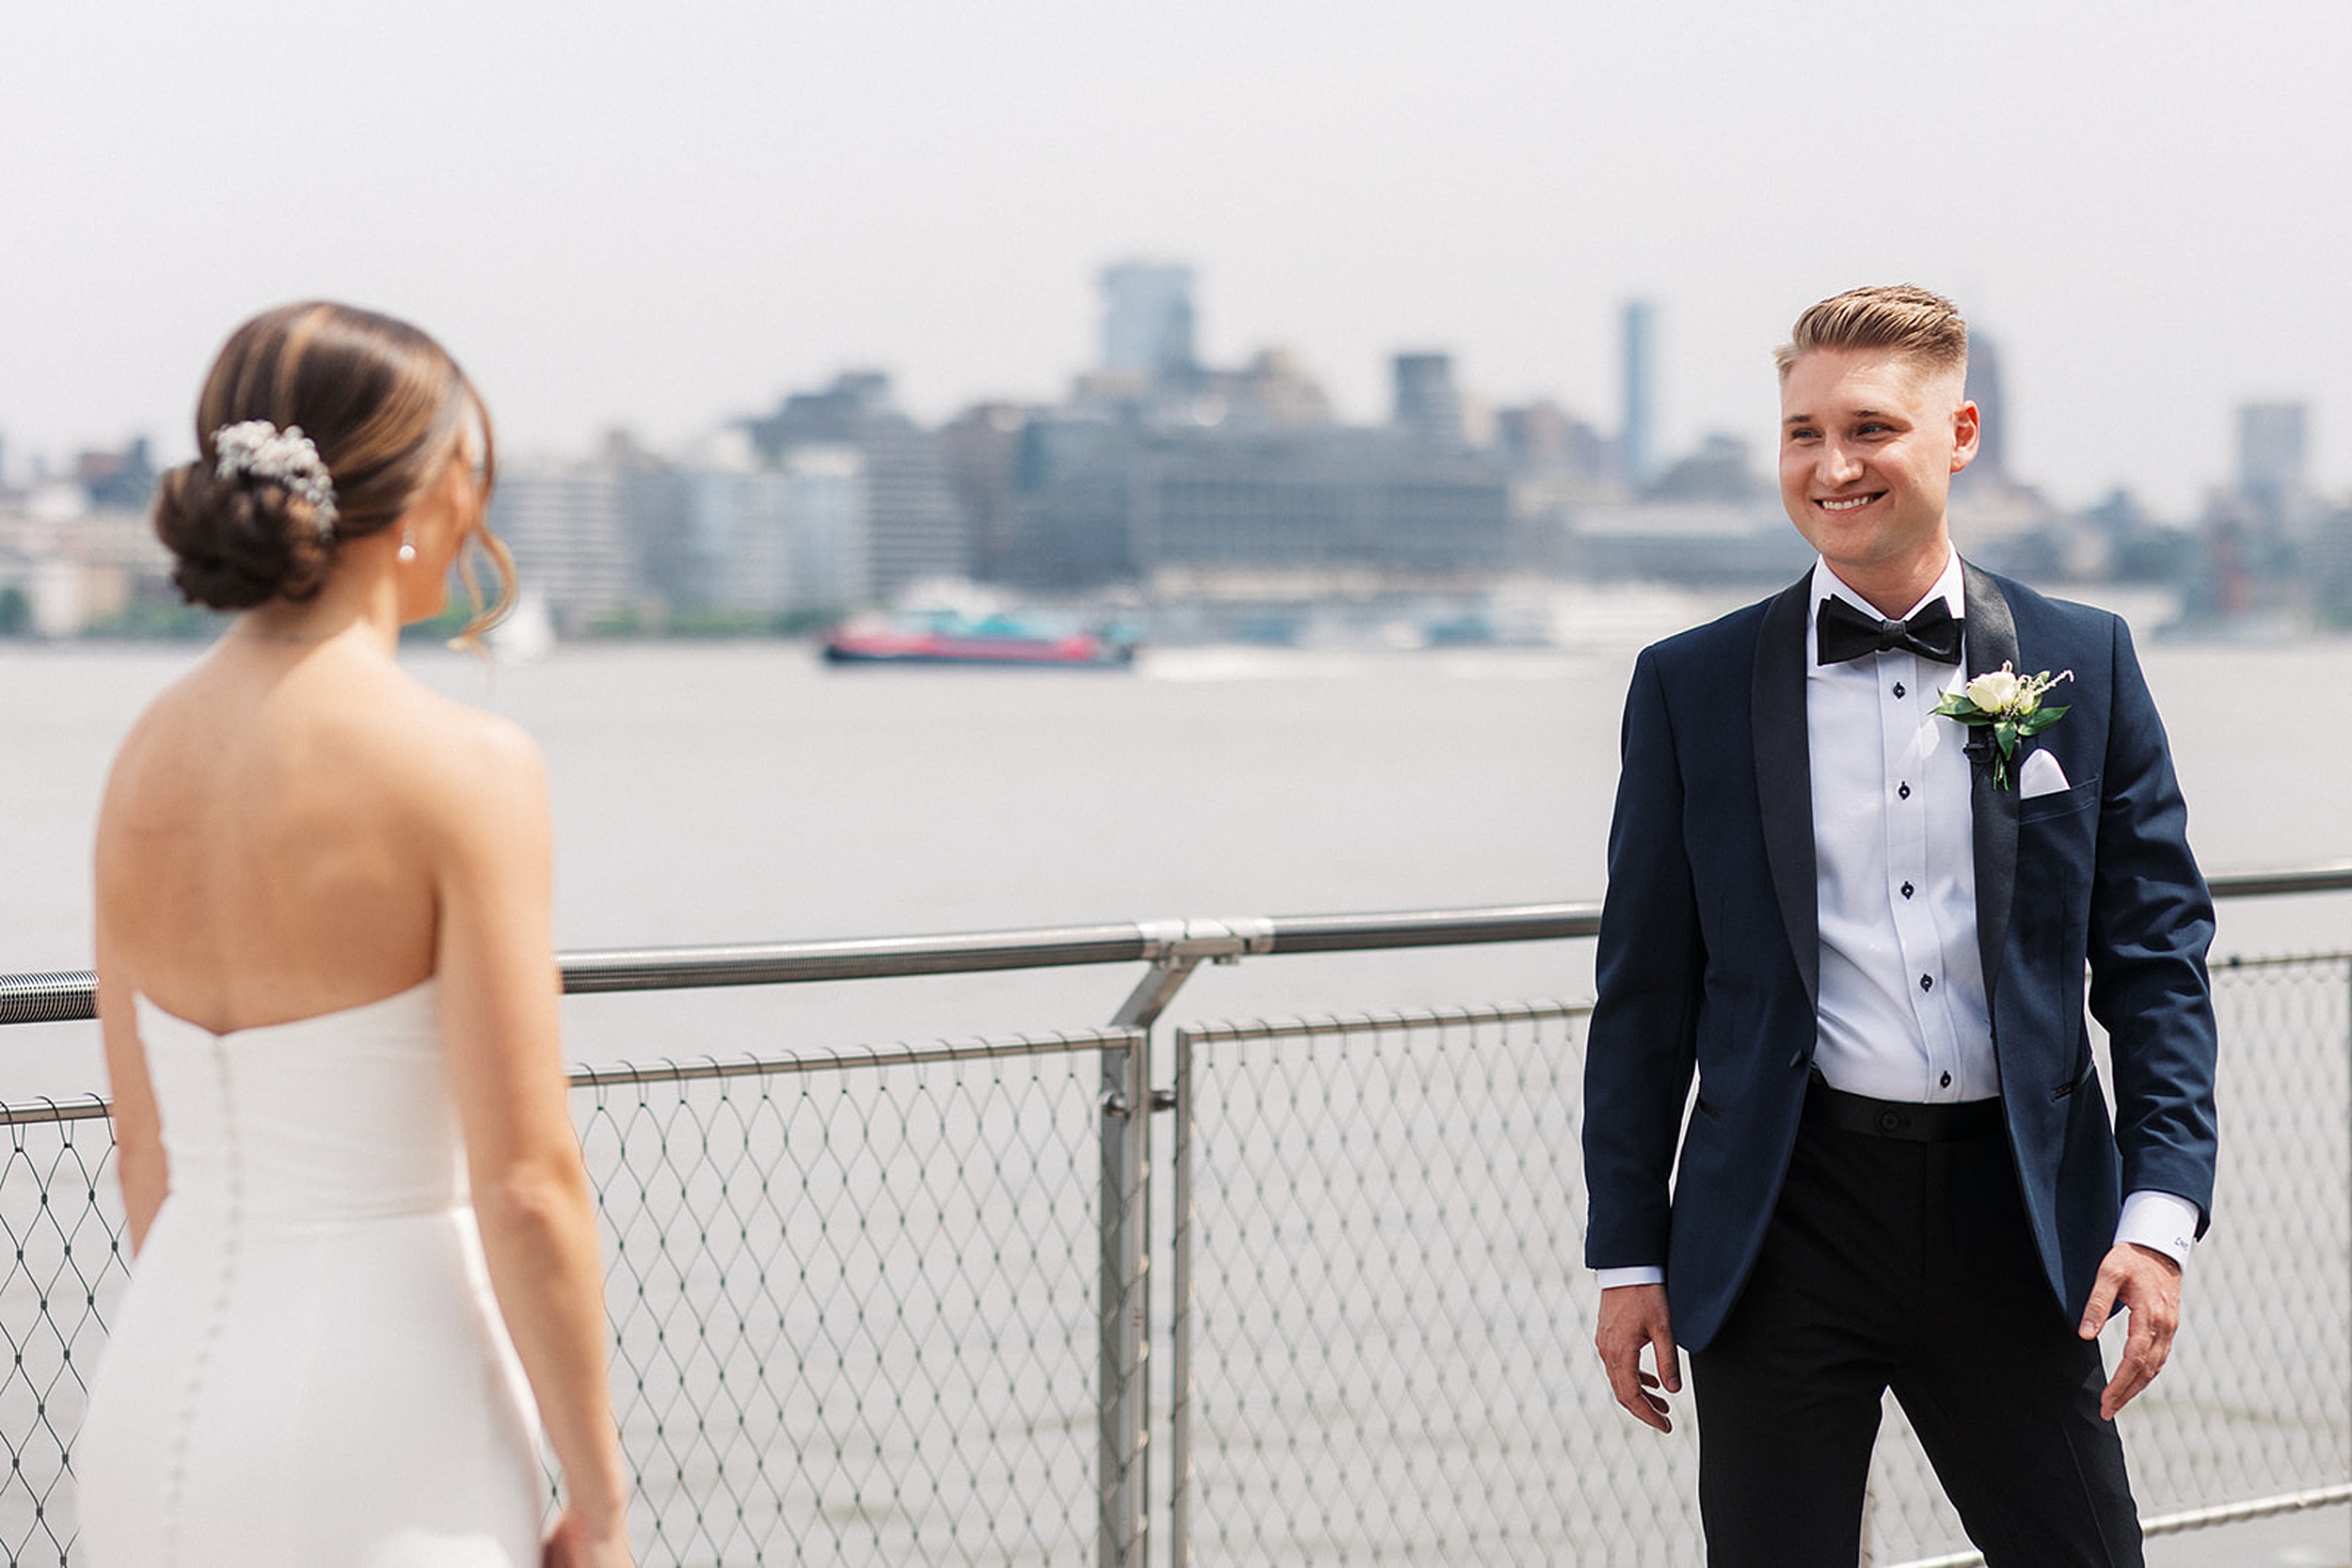 A groom smiles big as his bride walks toward him on a waterfront boardwalk